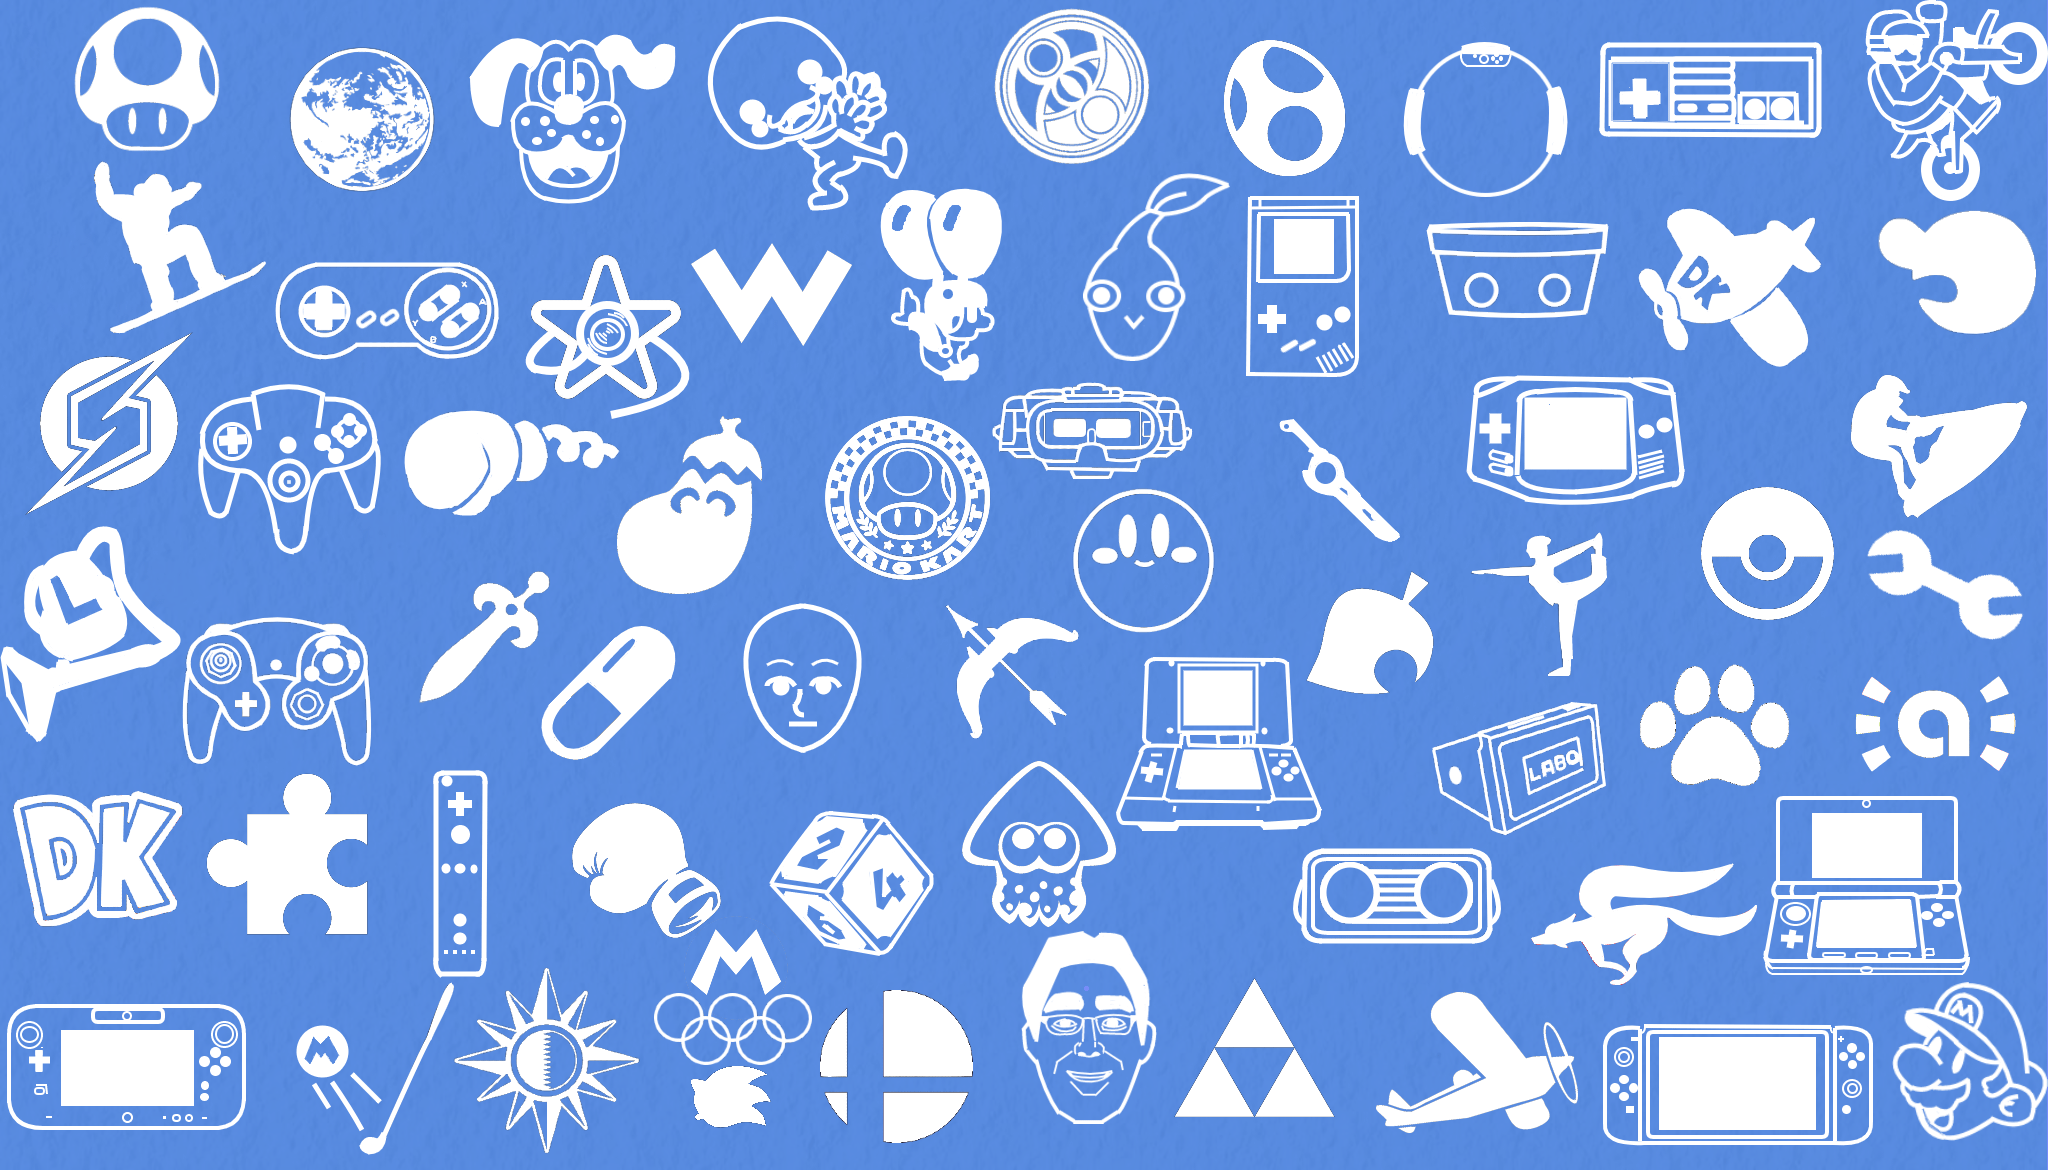 Nintendo wallpaper I made for my laptop